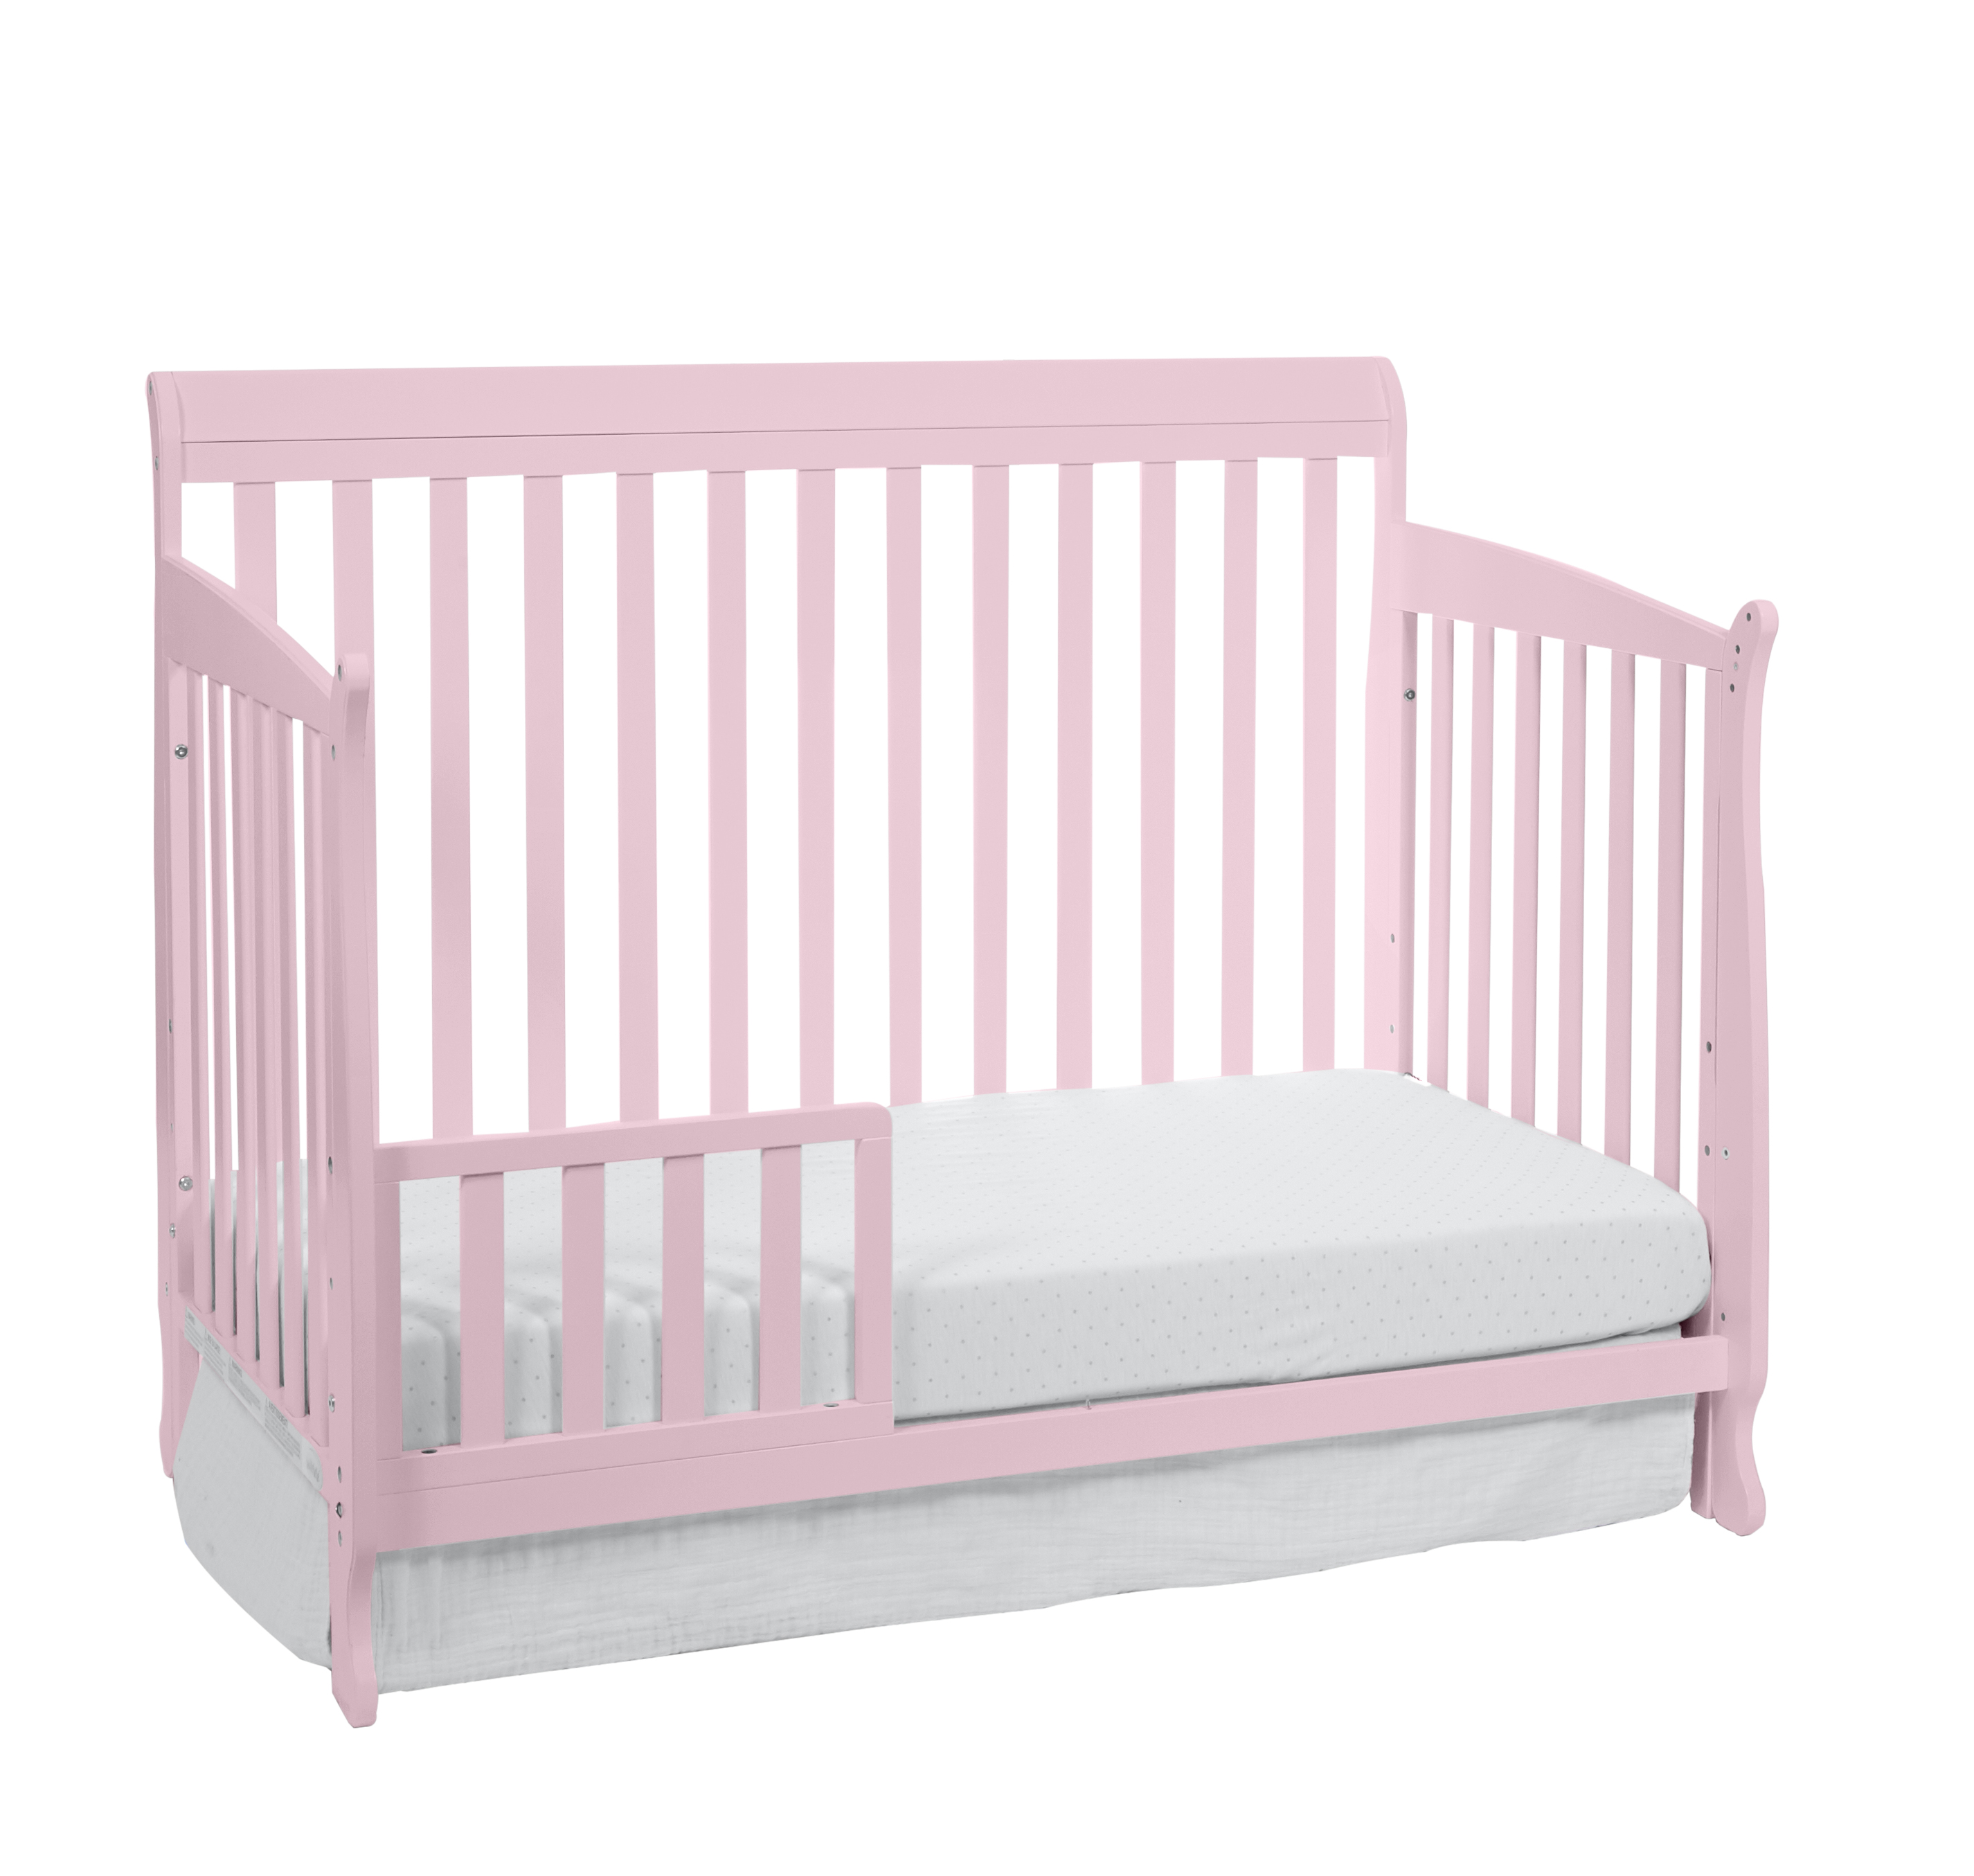 Suite Bebe Riley Crib and Toddler Guard Rail Bundle, Pink - image 1 of 8